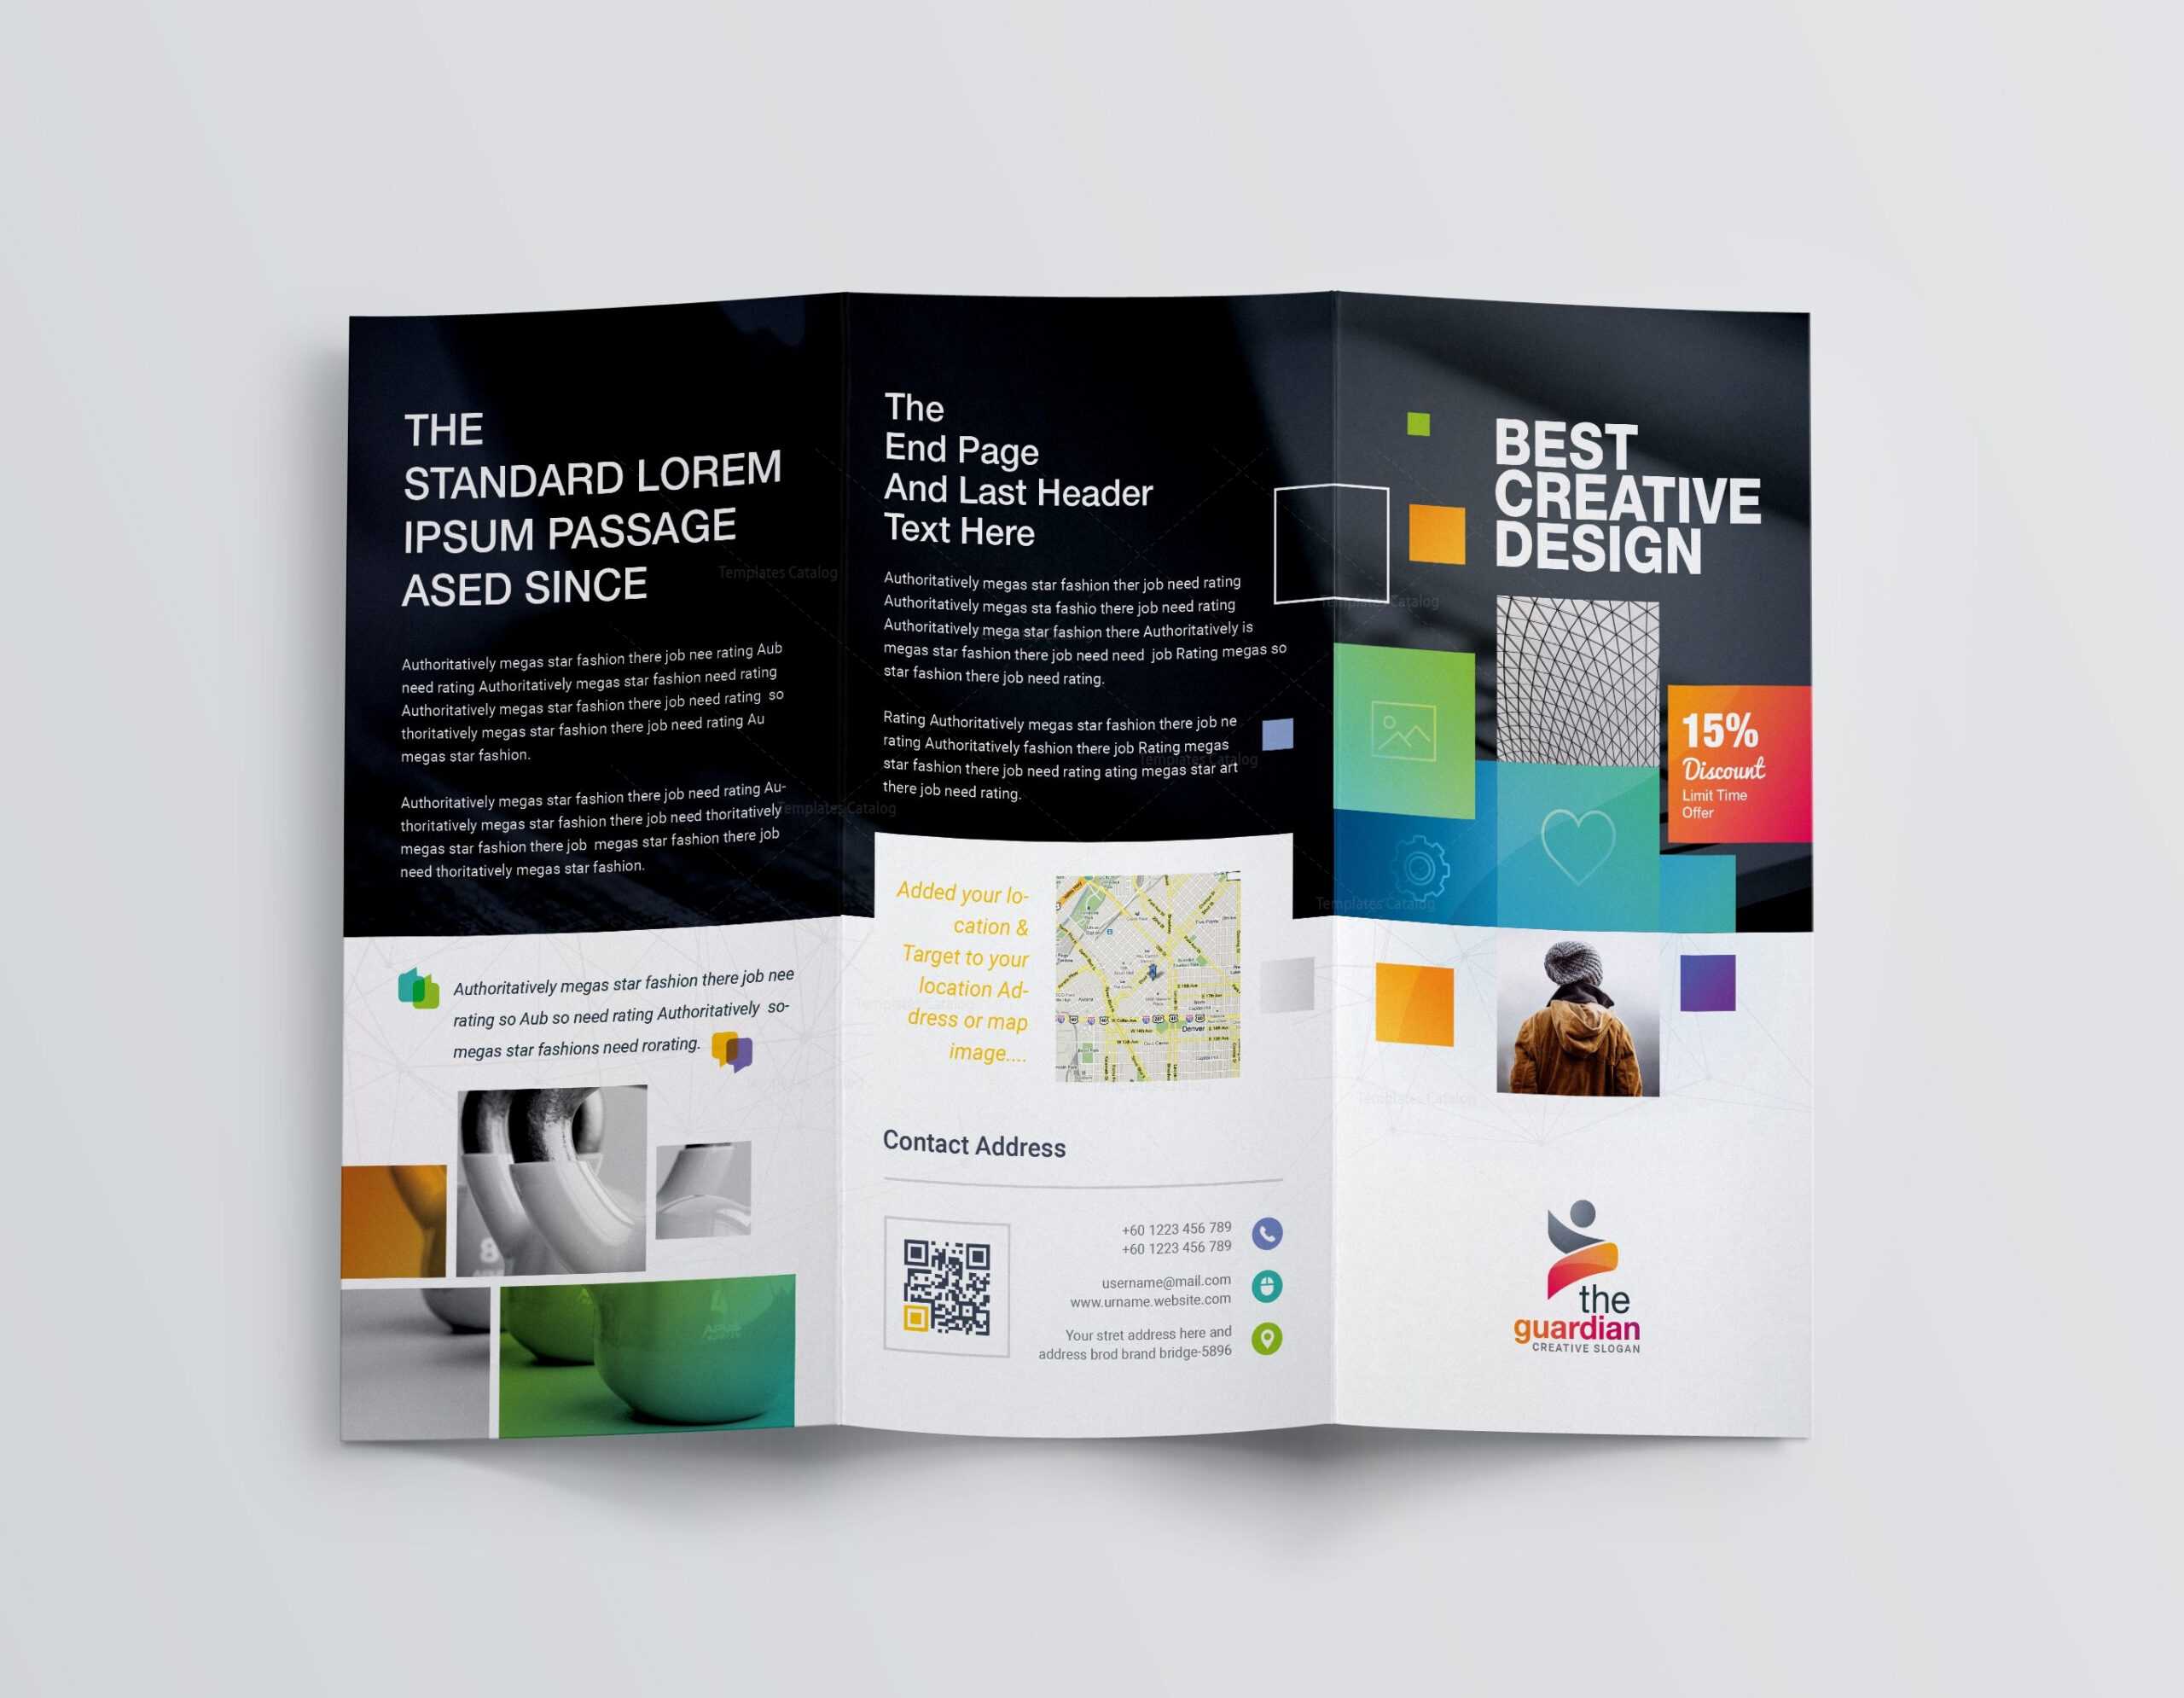 Best Creative Corporate Tri Fold Brochure Template 001211 Within Brochure Psd Template 3 Fold